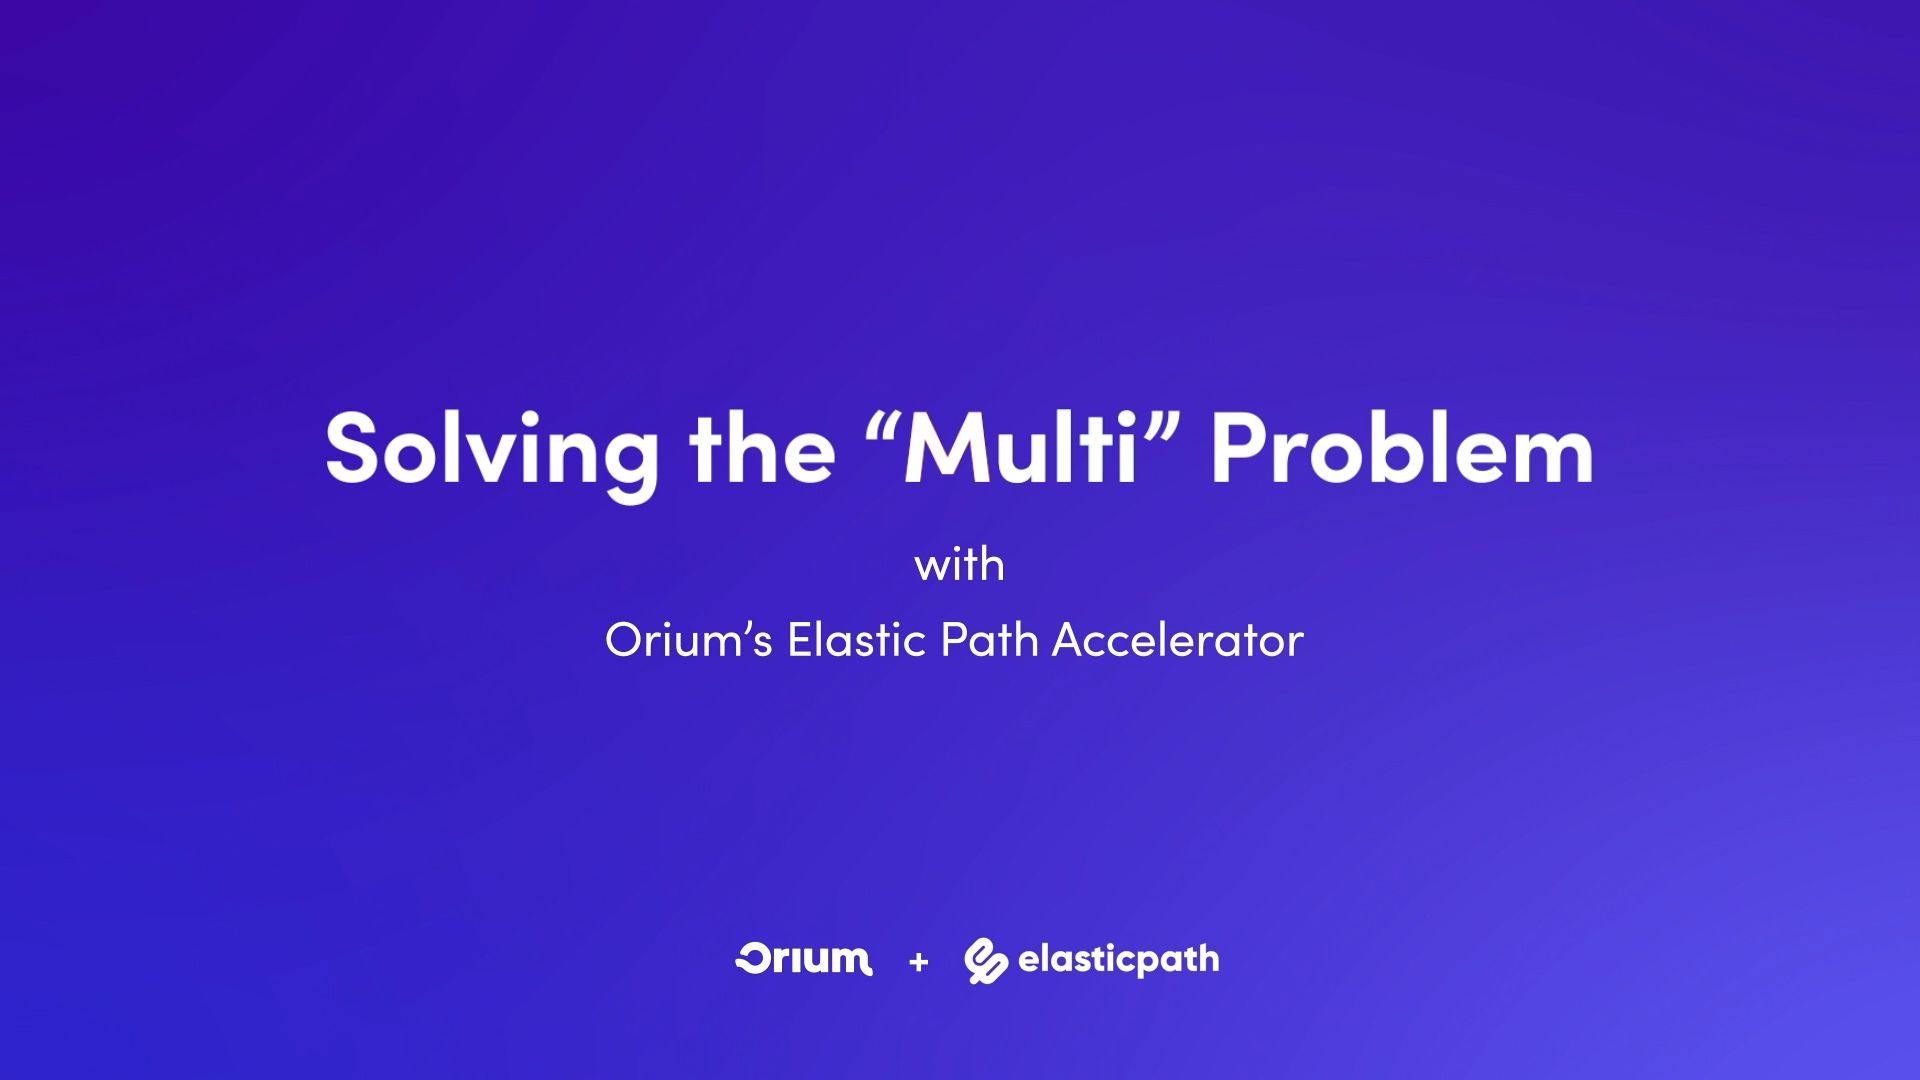 Elastic Path Accelerator "Multi Problem" video cover.